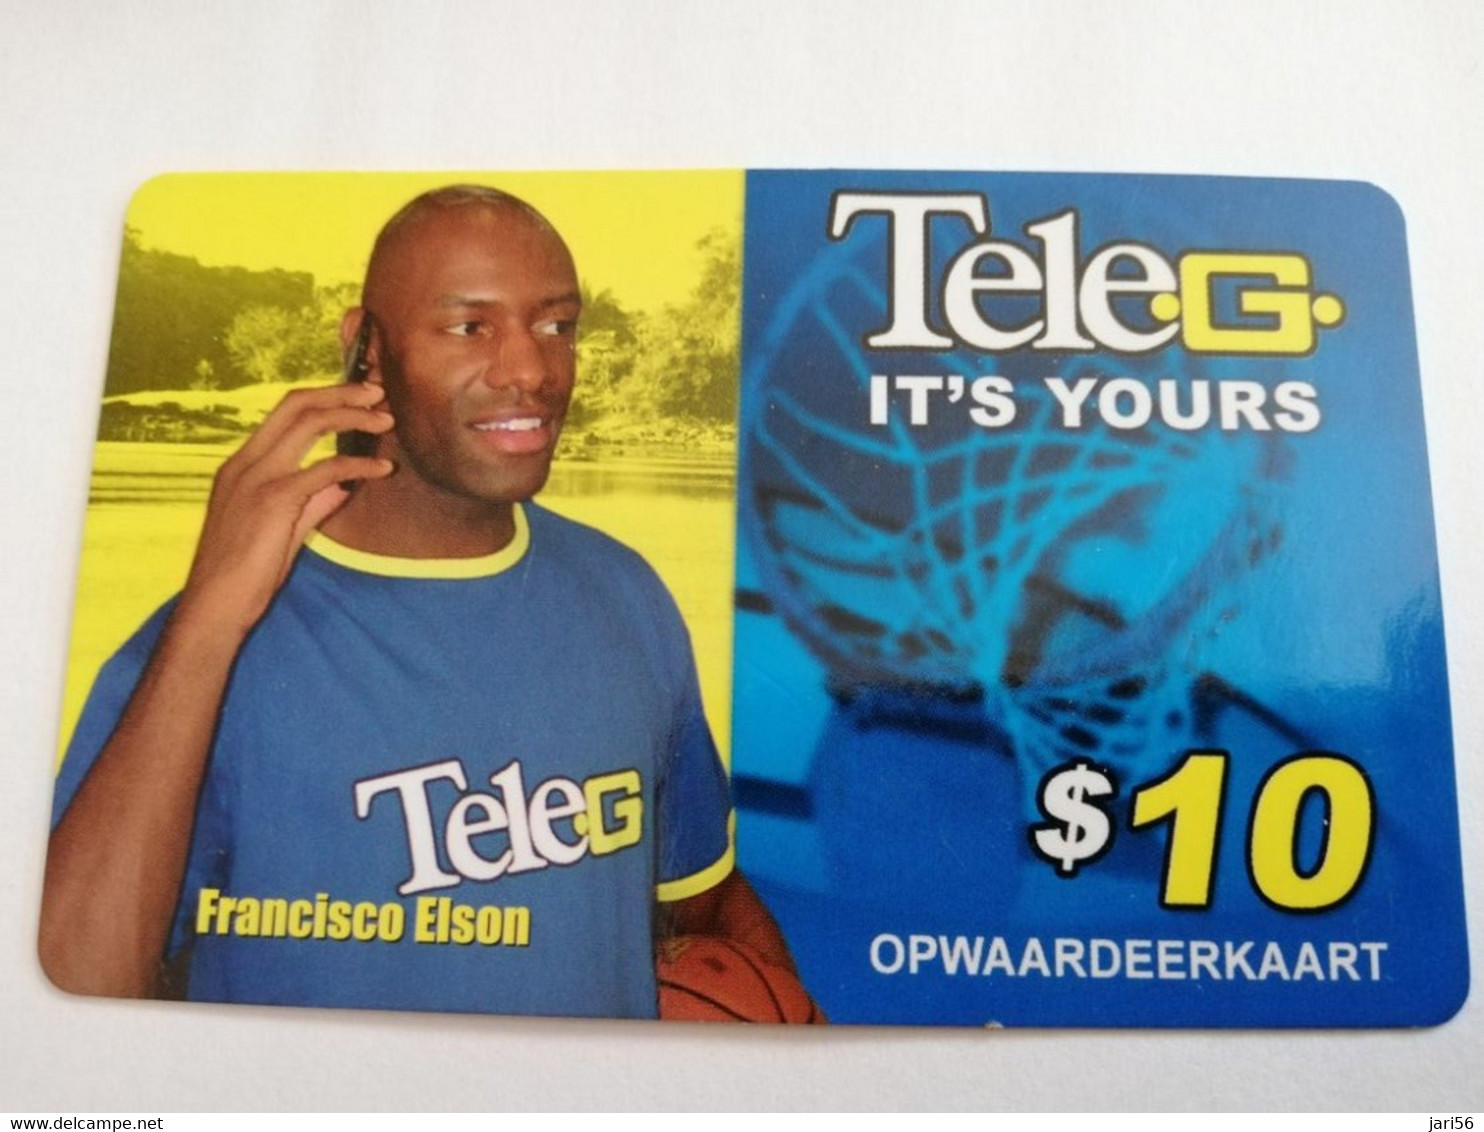 SURINAME US $10 UNIT GSM  PREPAID  FRANCISCO ELSON    MOBILE CARD           **5130 ** - Suriname